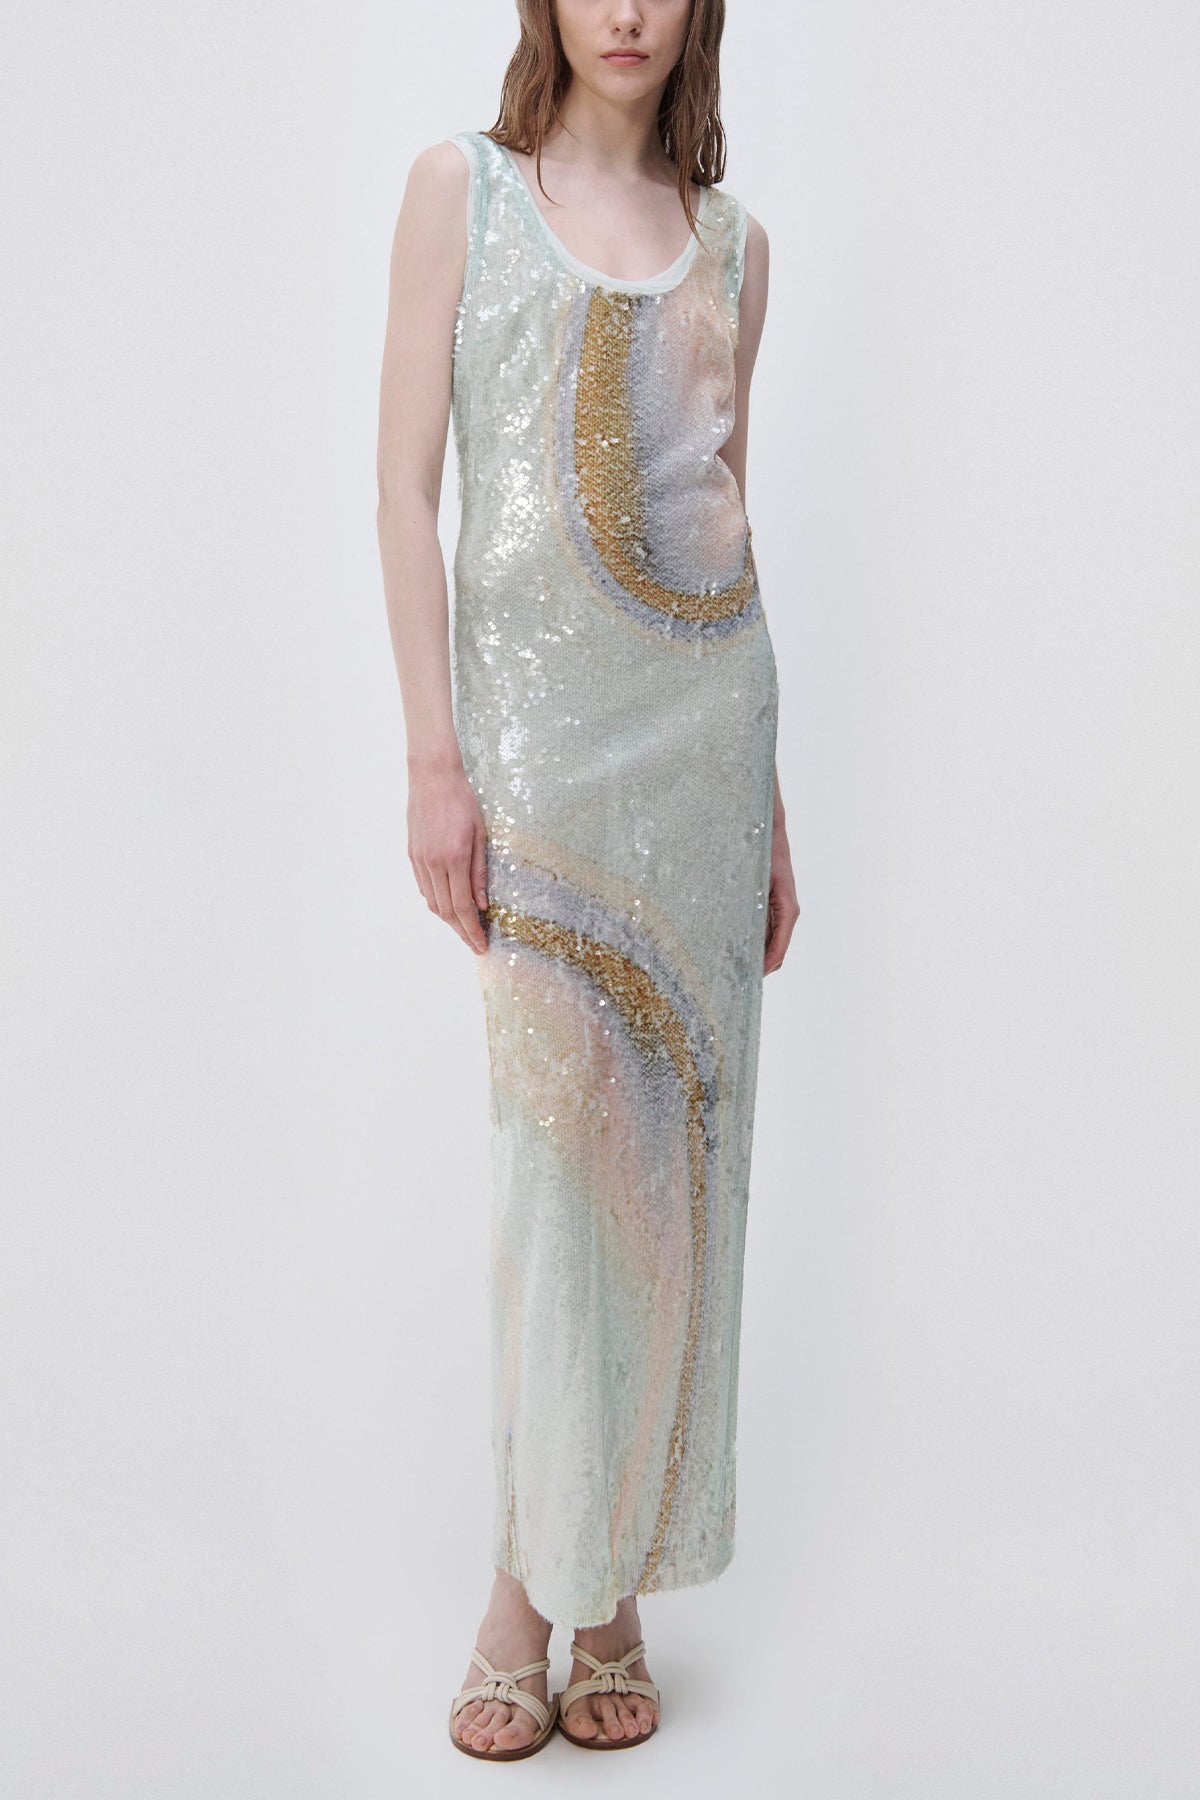 Serene Marble Print Sequin Dress in Seafoam - shop-olivia.com